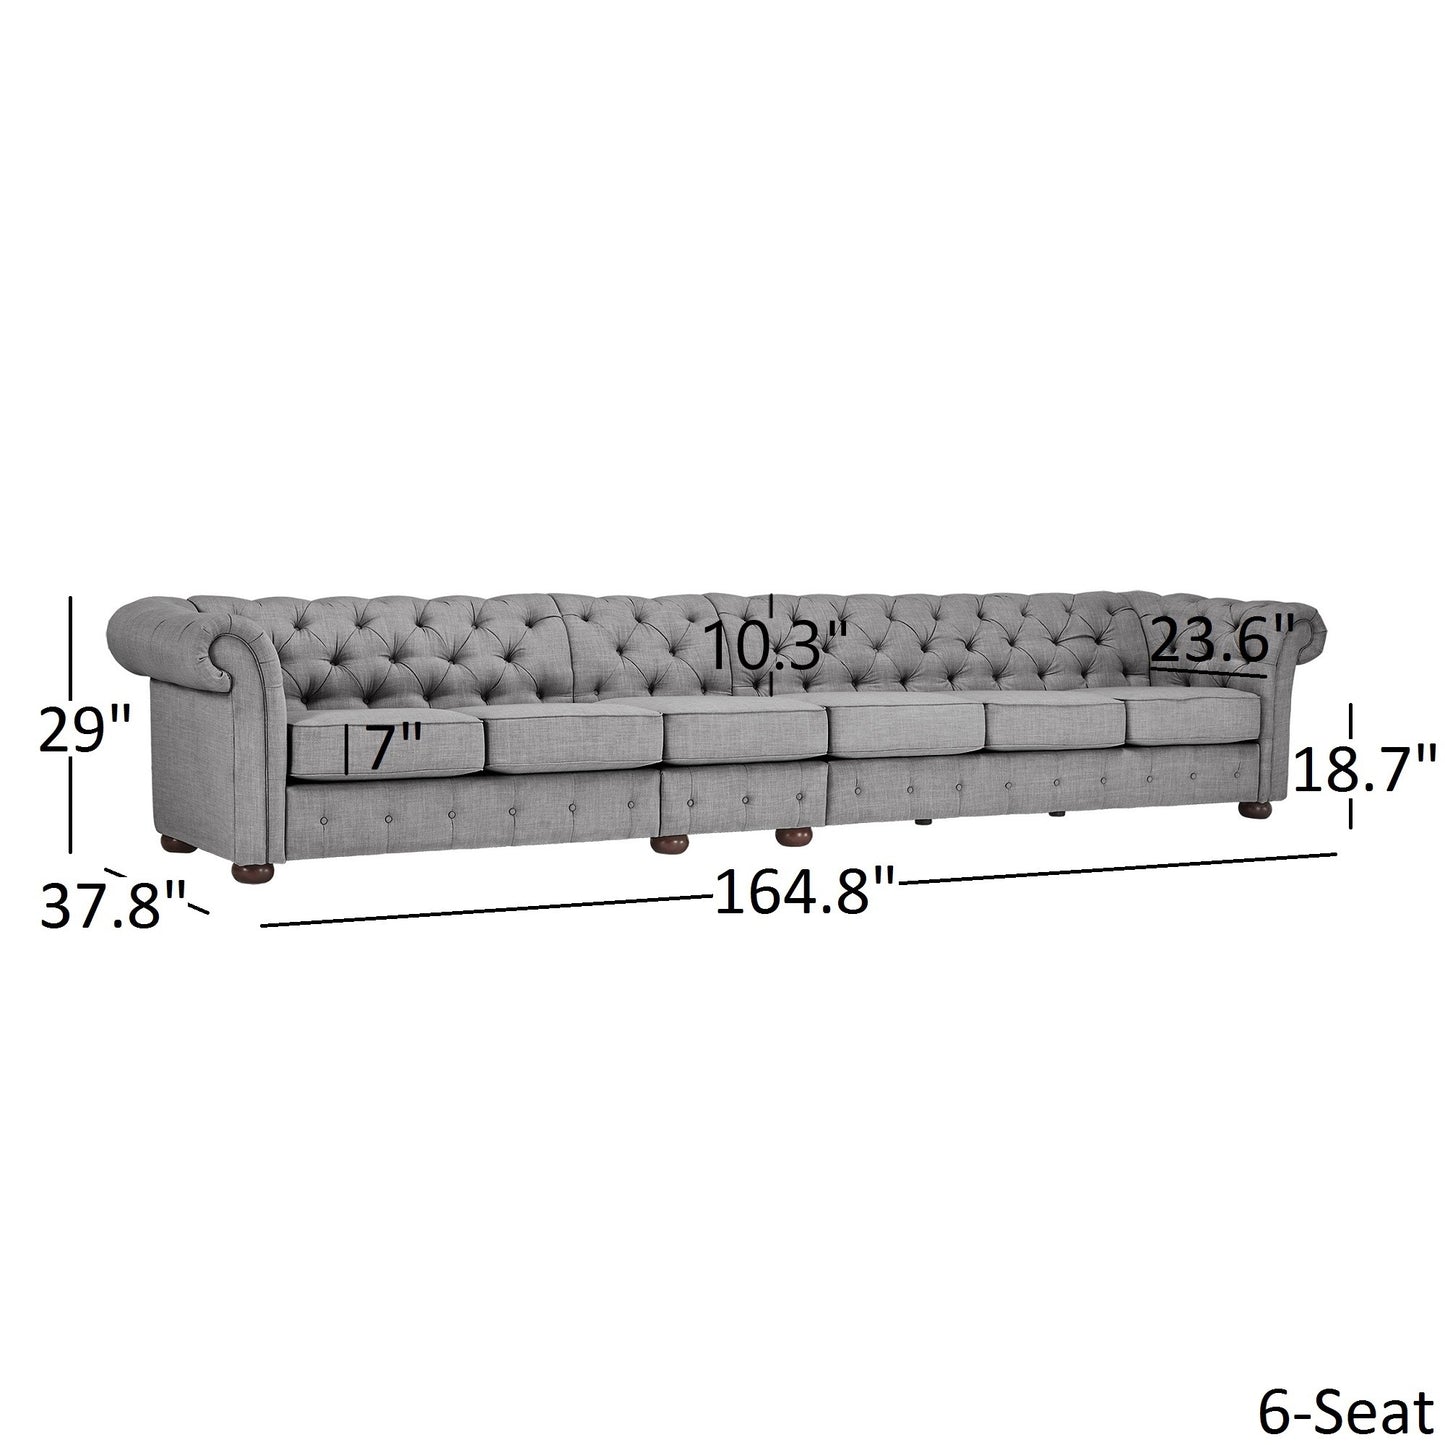 6-Seat Modular Chesterfield Sofa - Grey Linen